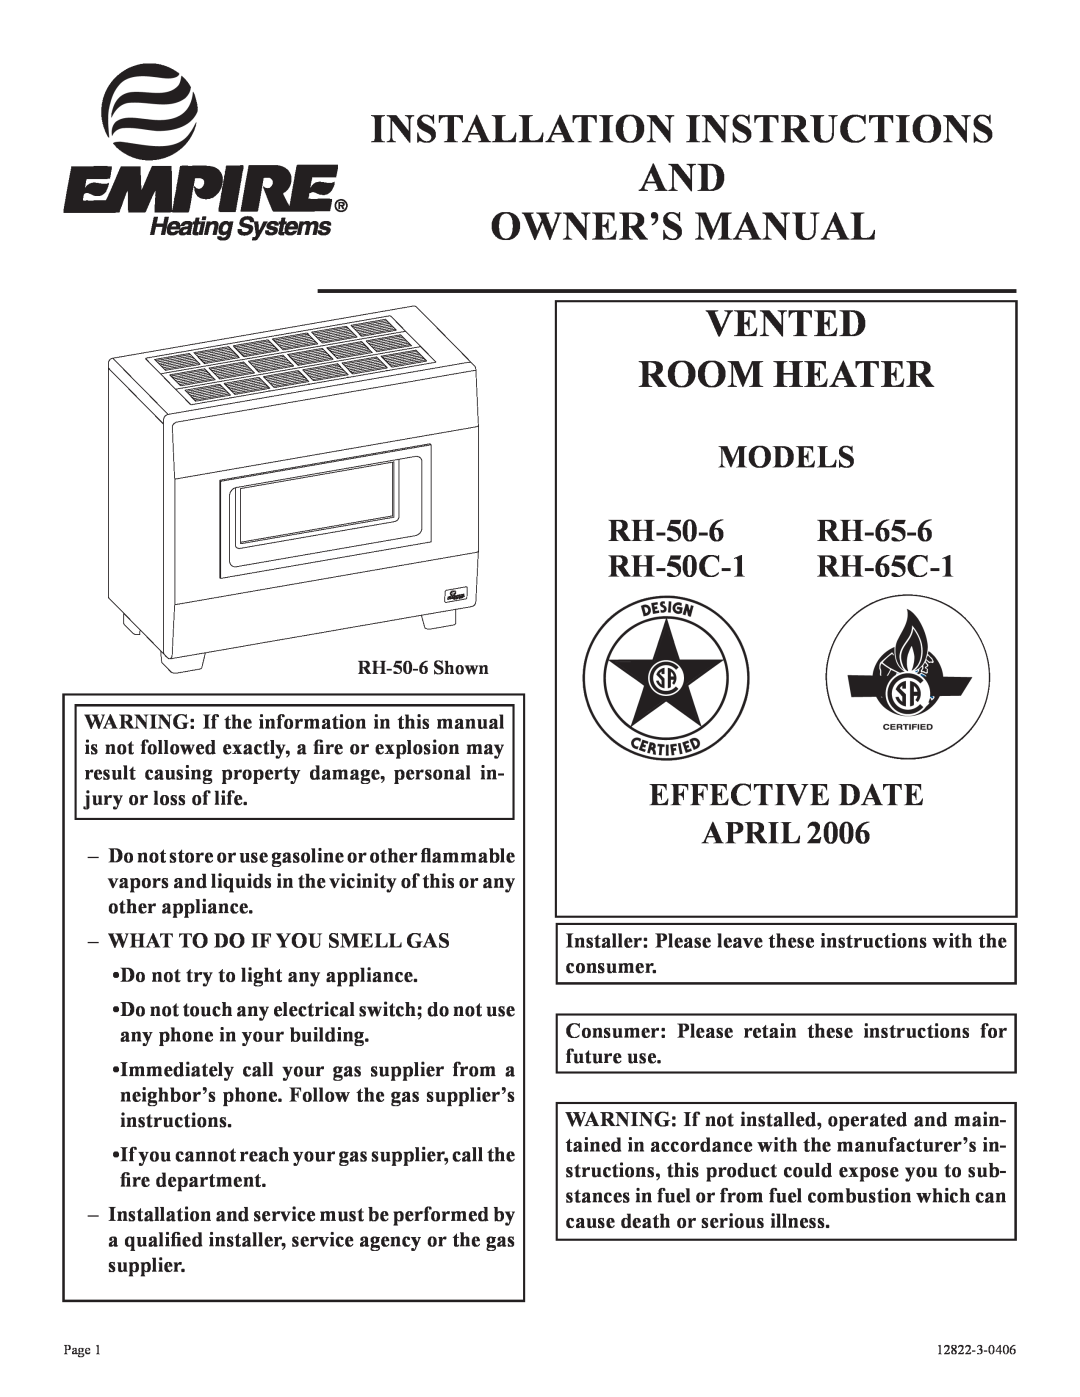 Empire Products installation instructions Vented Room Heater, MODELS RH-50-6 RH-65-6 RH-50C-1 RH-65C-1 